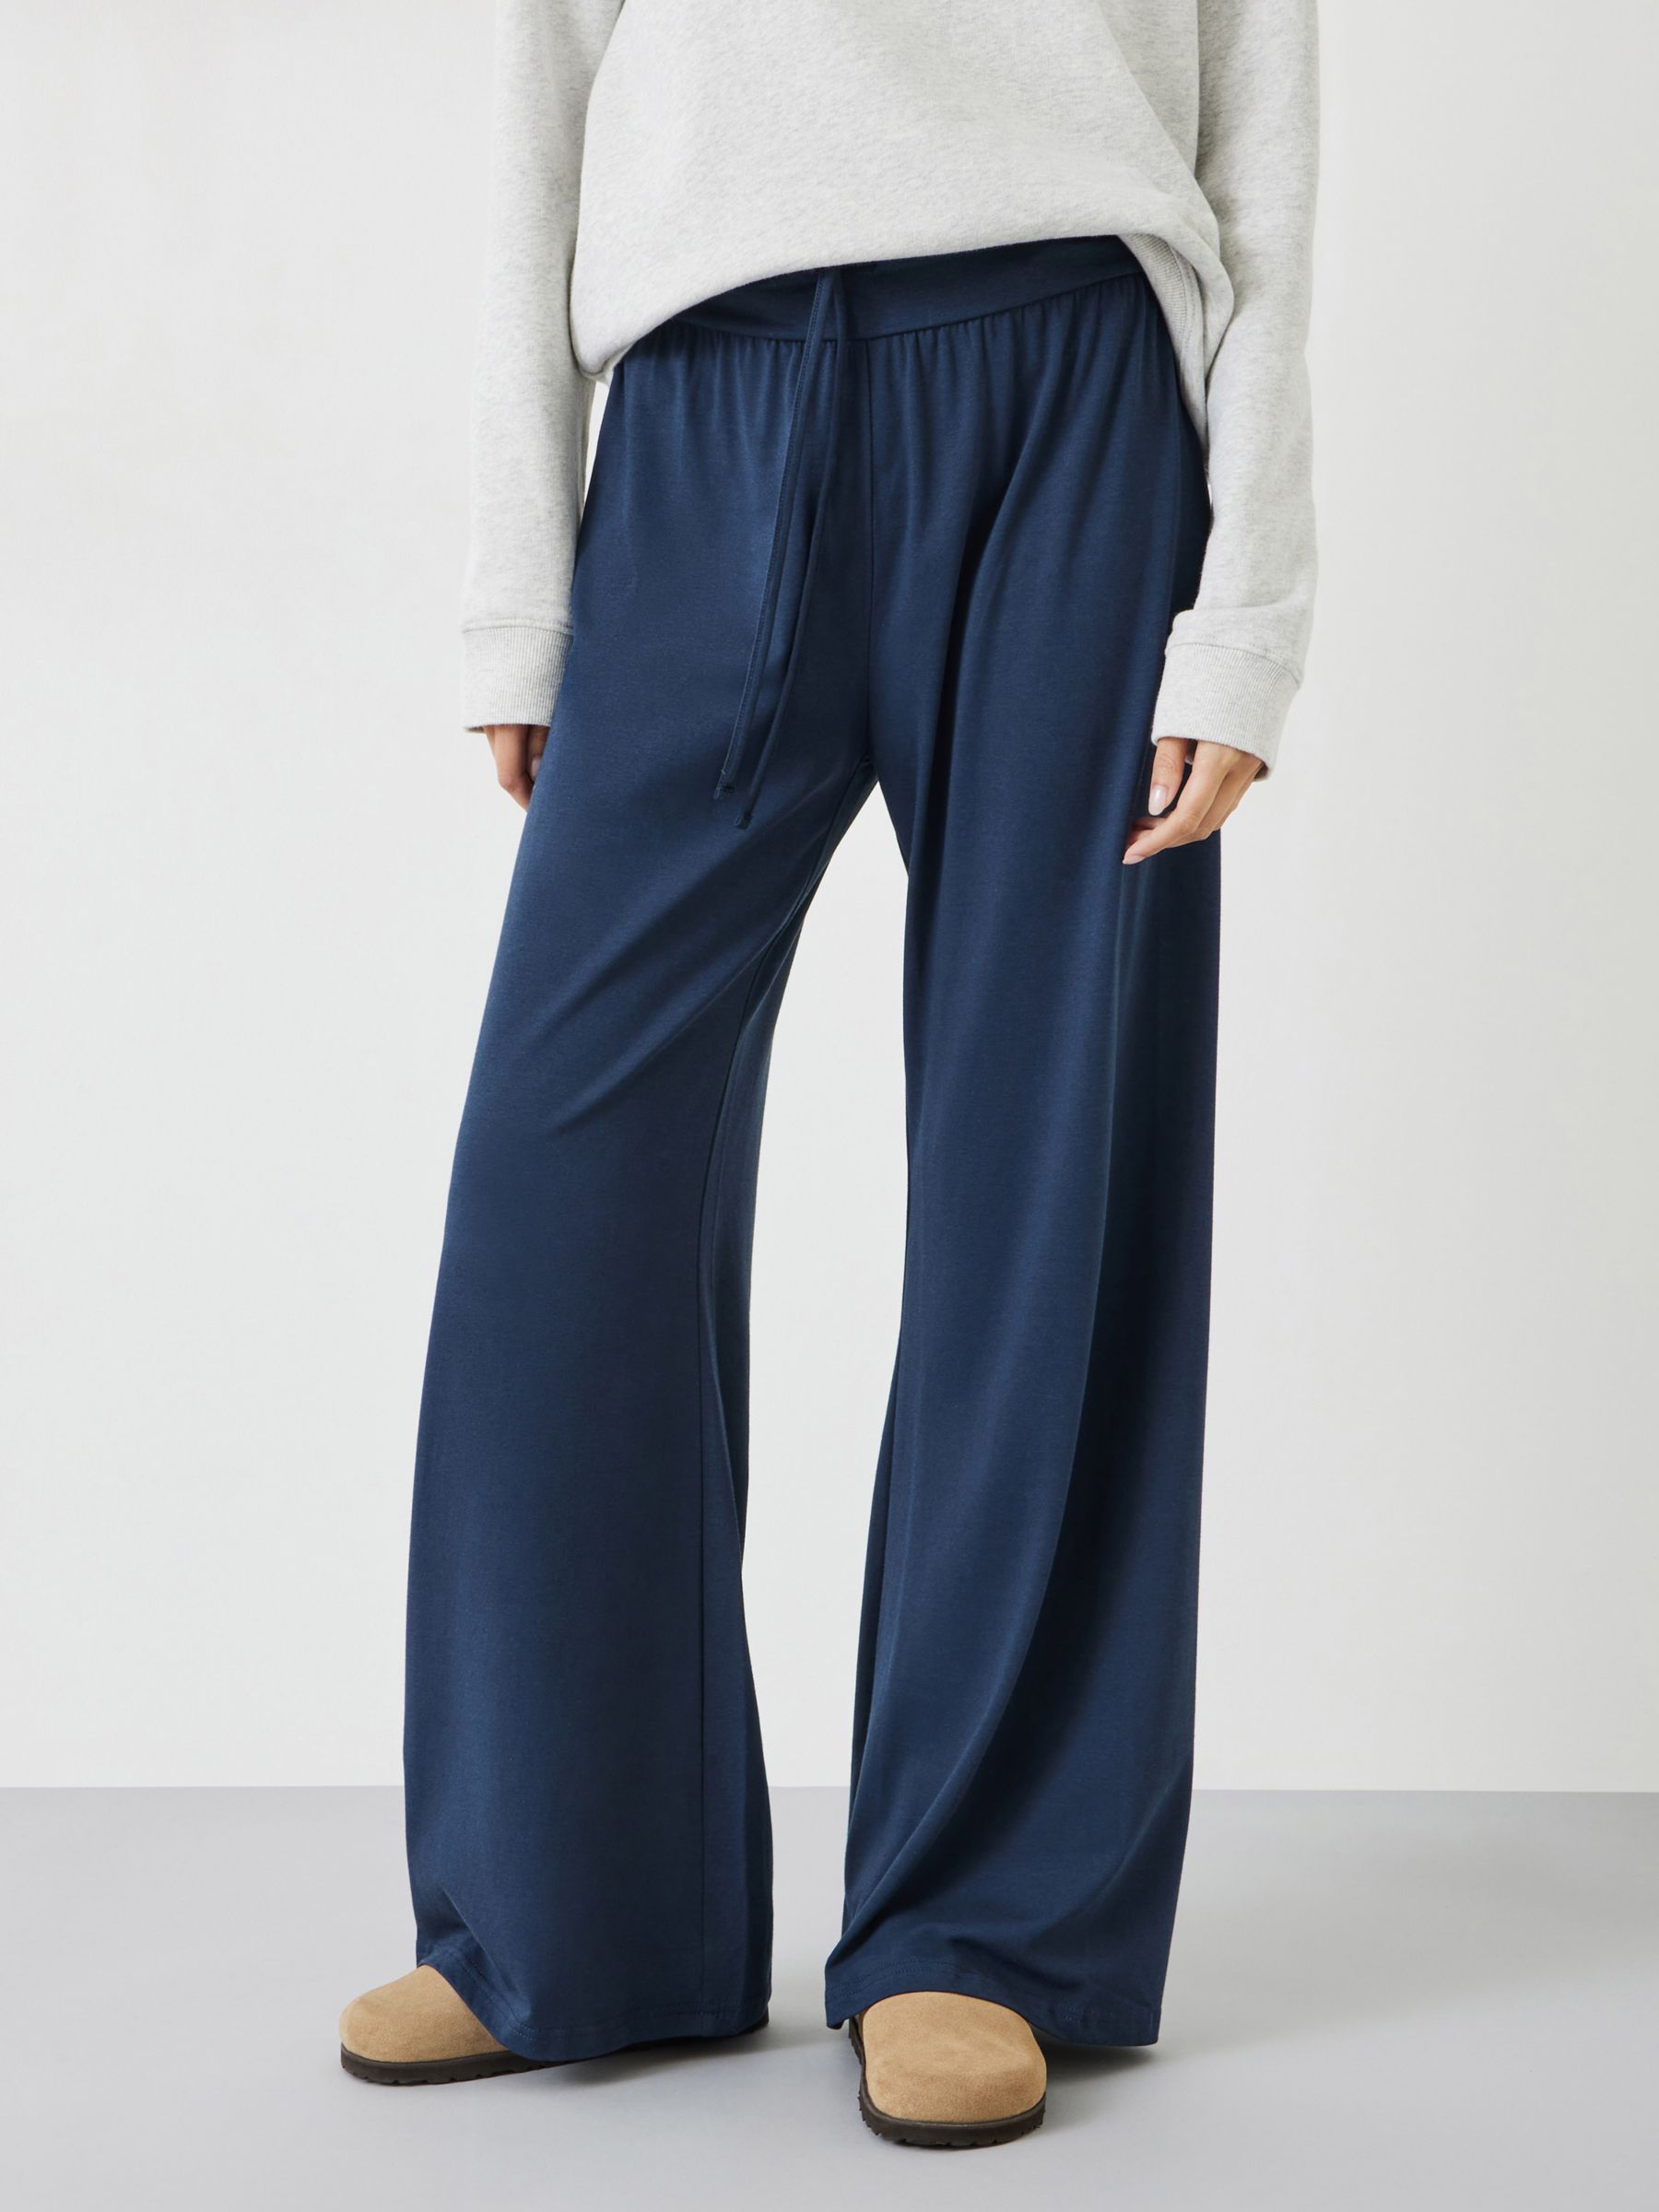 AUTOMET Women's Flare Sweatpants Fleece Lined Baggy Extra Long